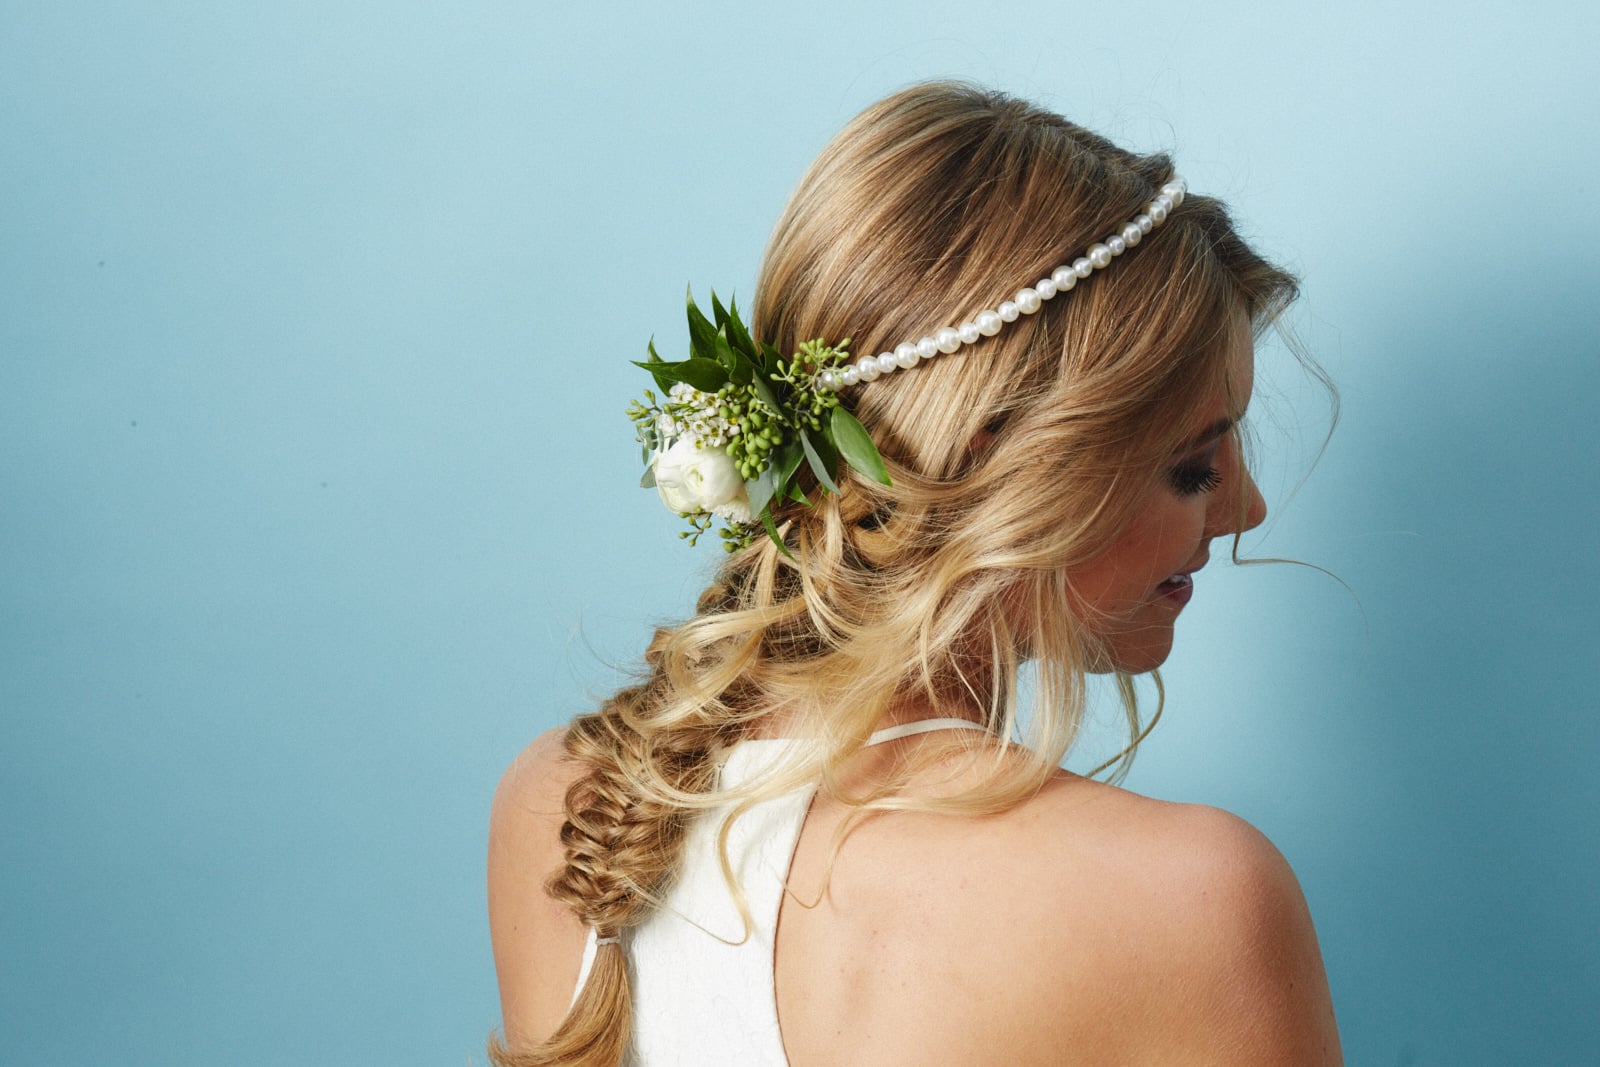 Natural Dried Flower Hairpins, Fall Autumn Wedding Bridal Hair Accessories,  Orange and Green Hair Piece, Boho Floral Clips for Bride 